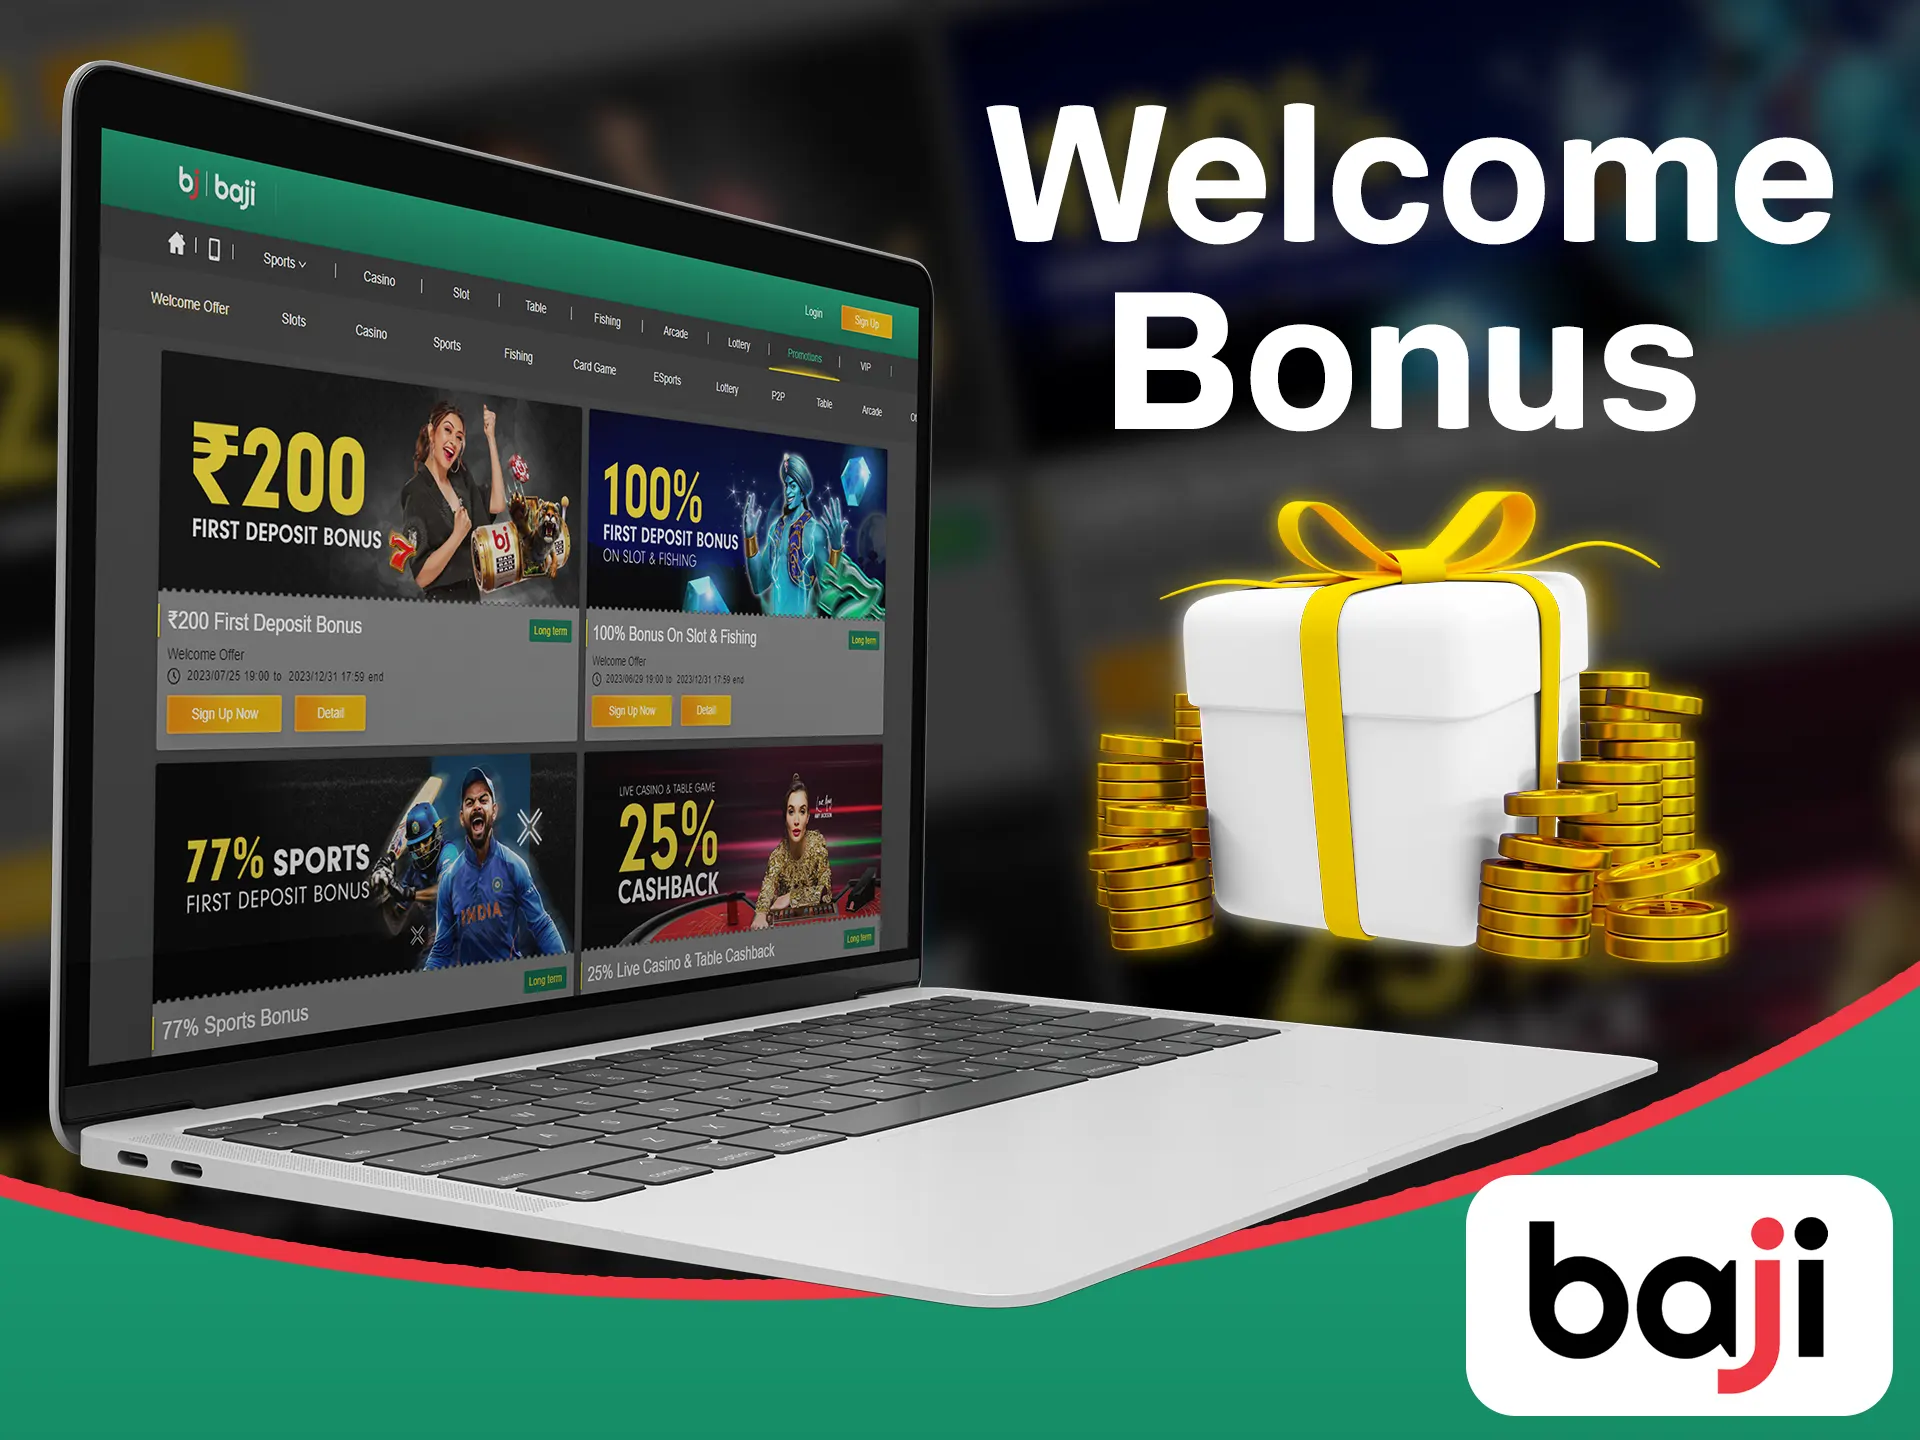 Get a casino welcome bonus after playing casino games in Baji casino.